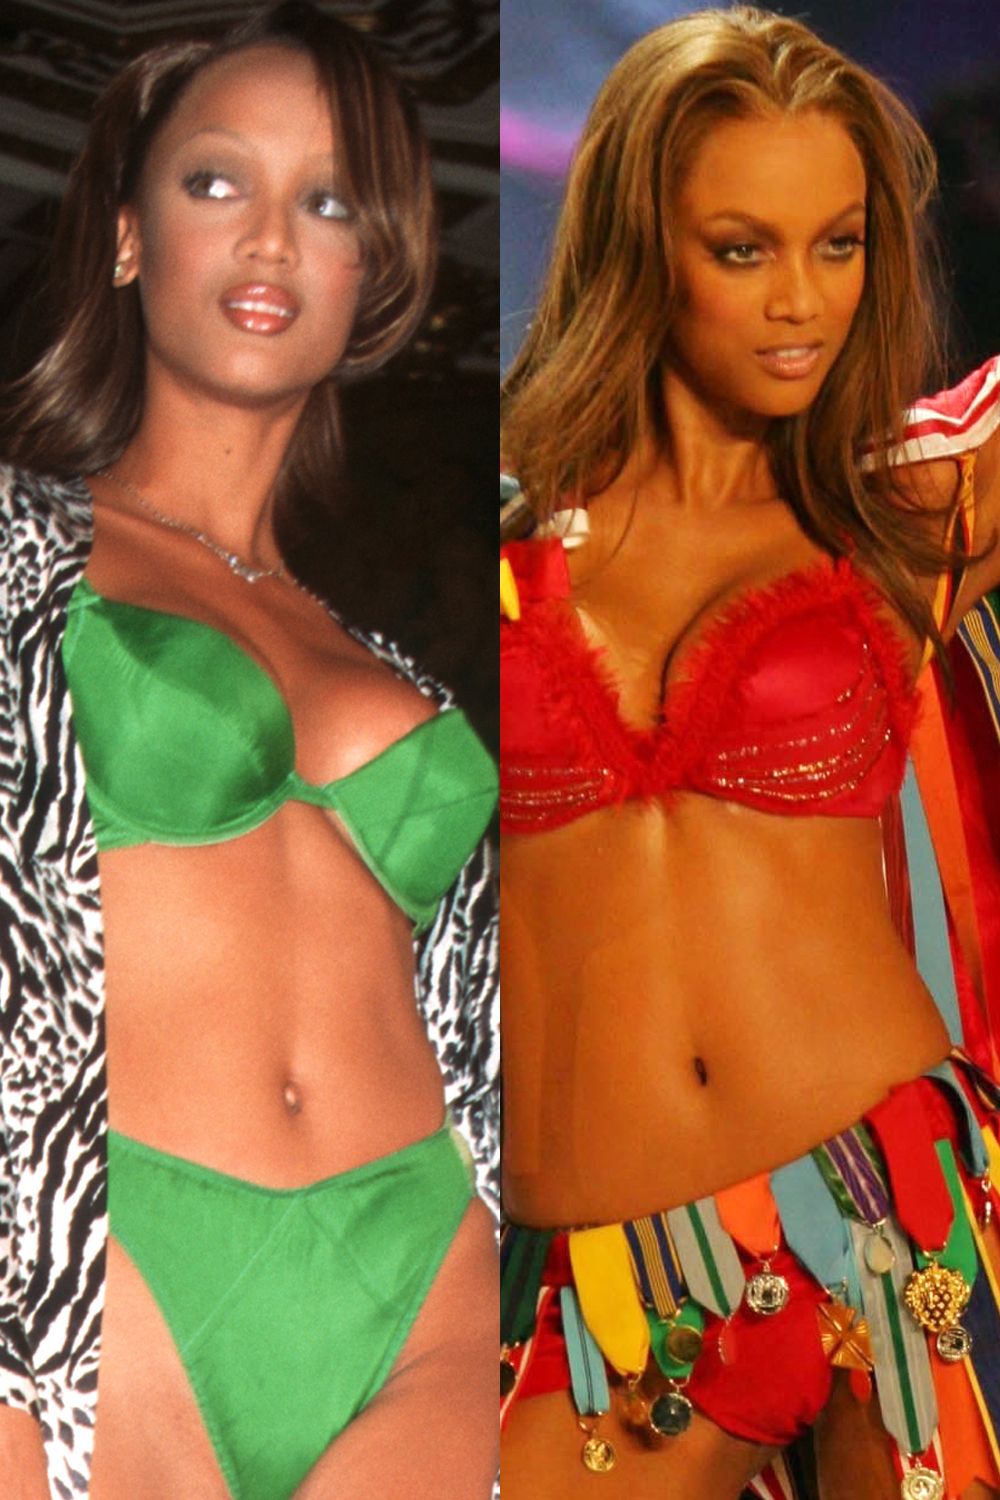 Victoria S Secret Models Photos Then And Now